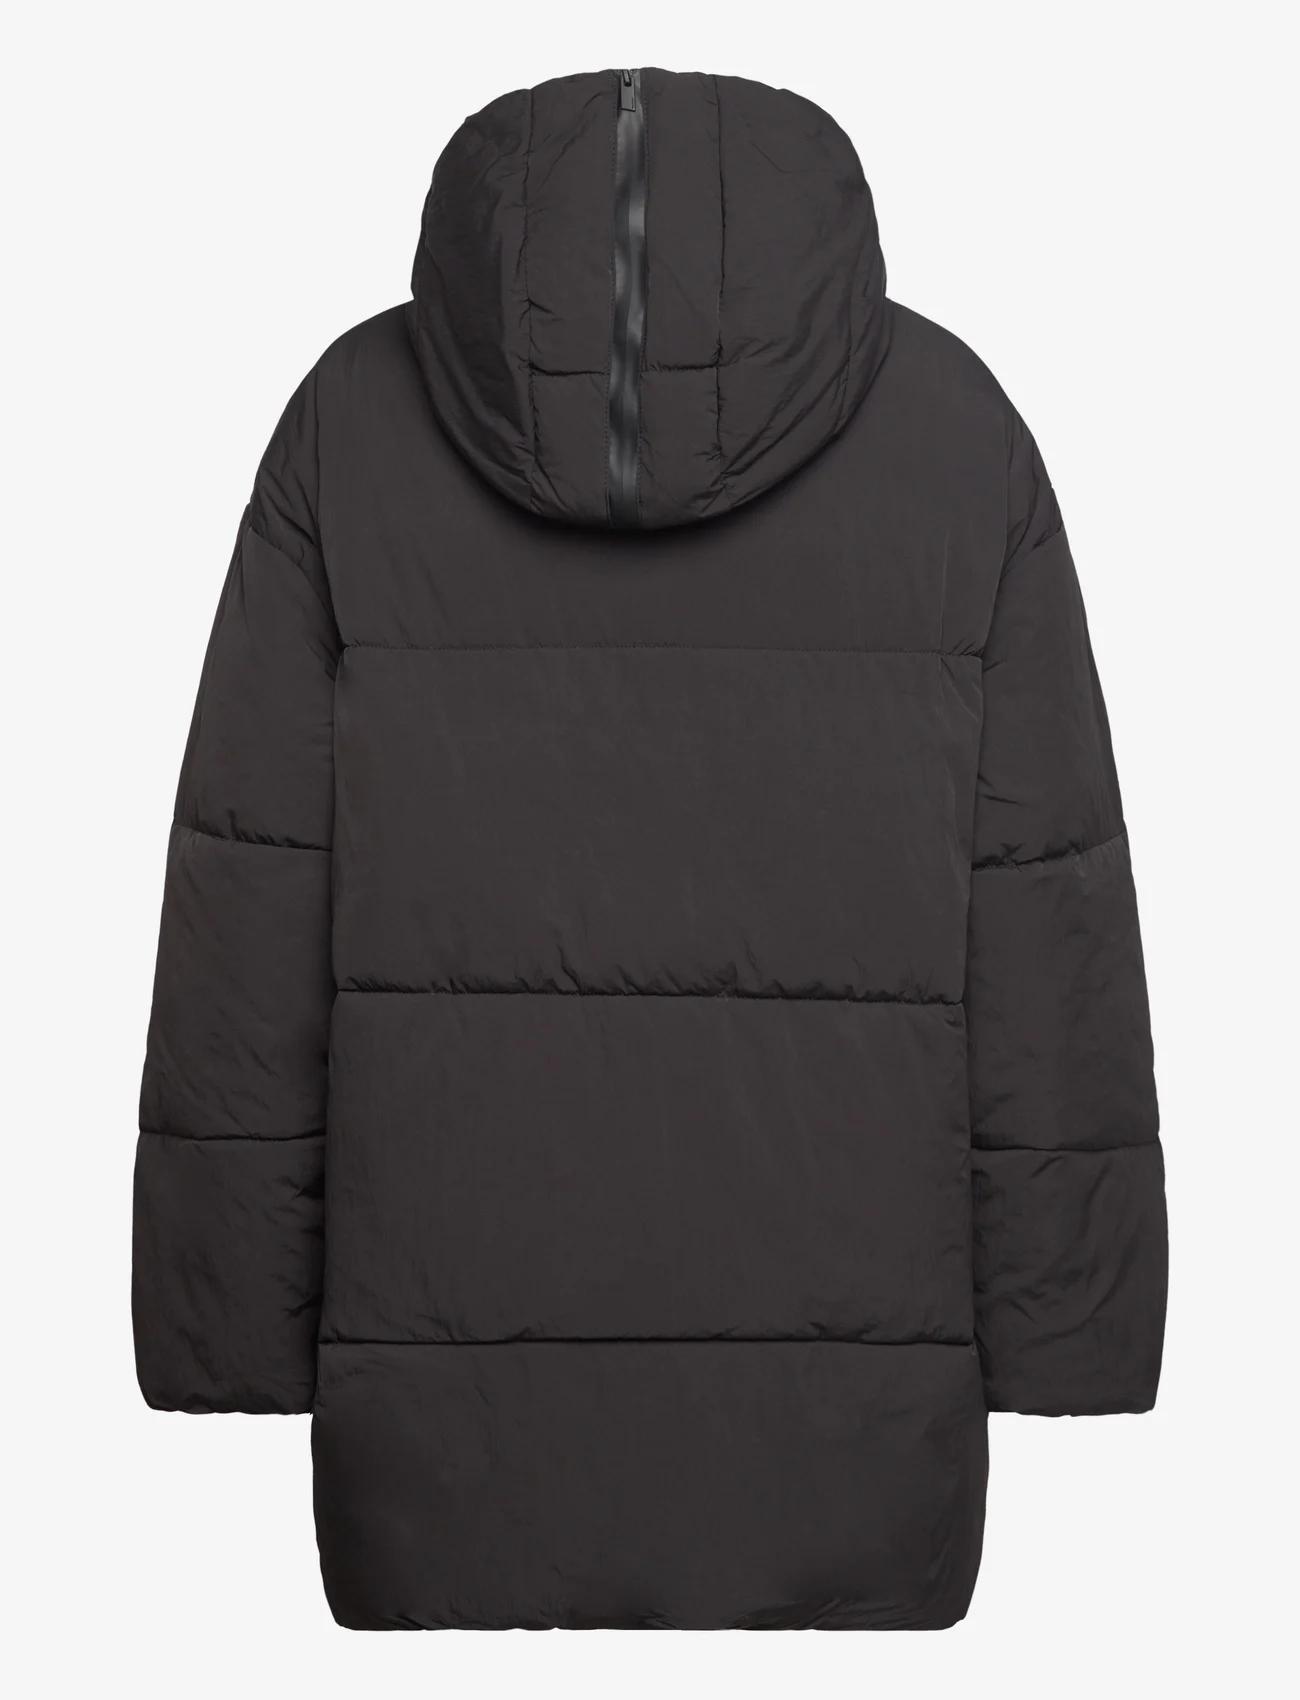 Selected Femme - SLFFRAYA PUFFER JACKET B - winter jacket - black - 1